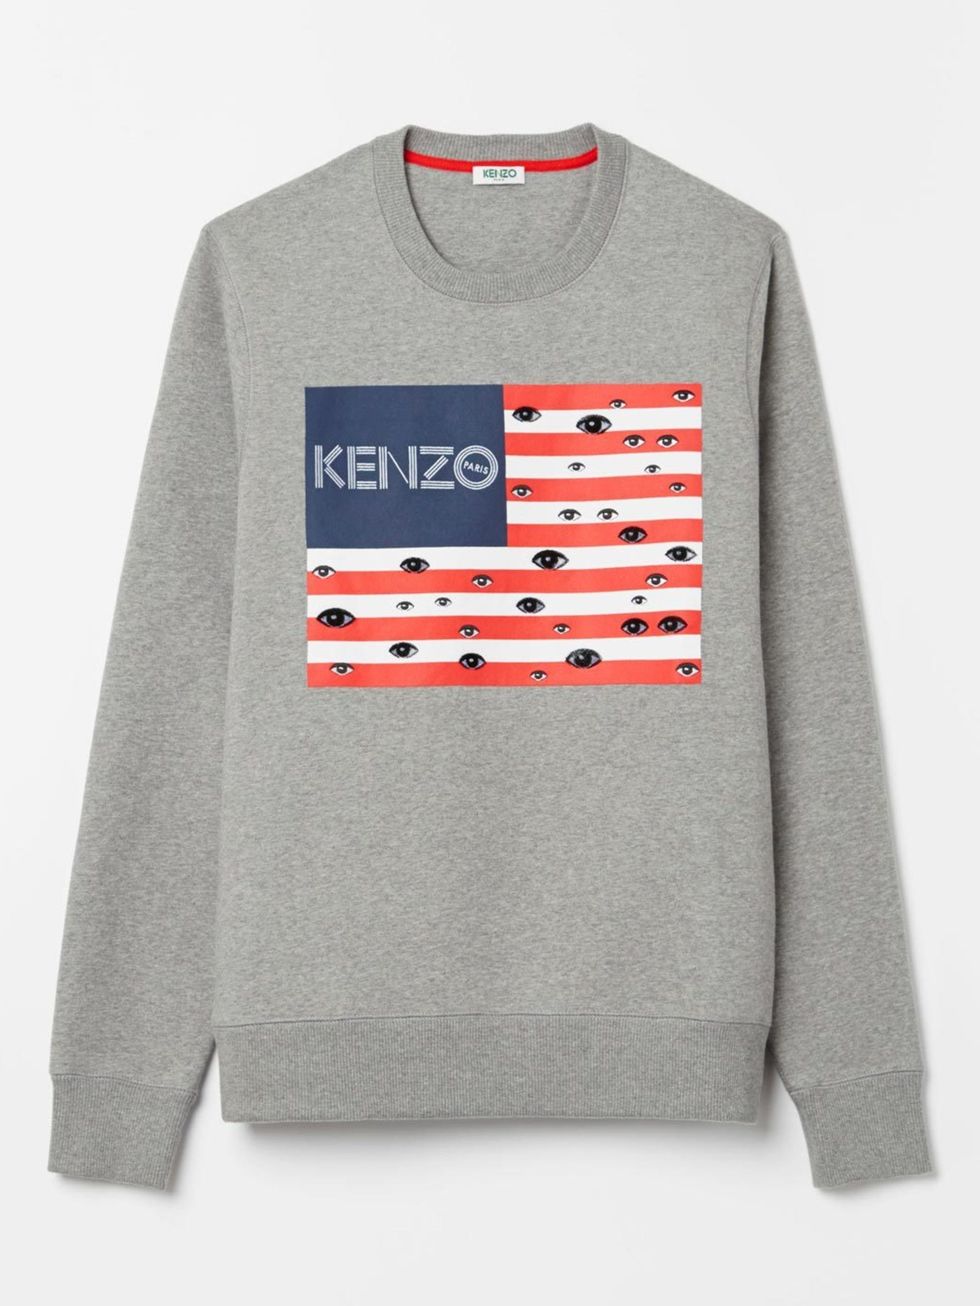 <p>Kenzo X Toiletpaper sweater</p>